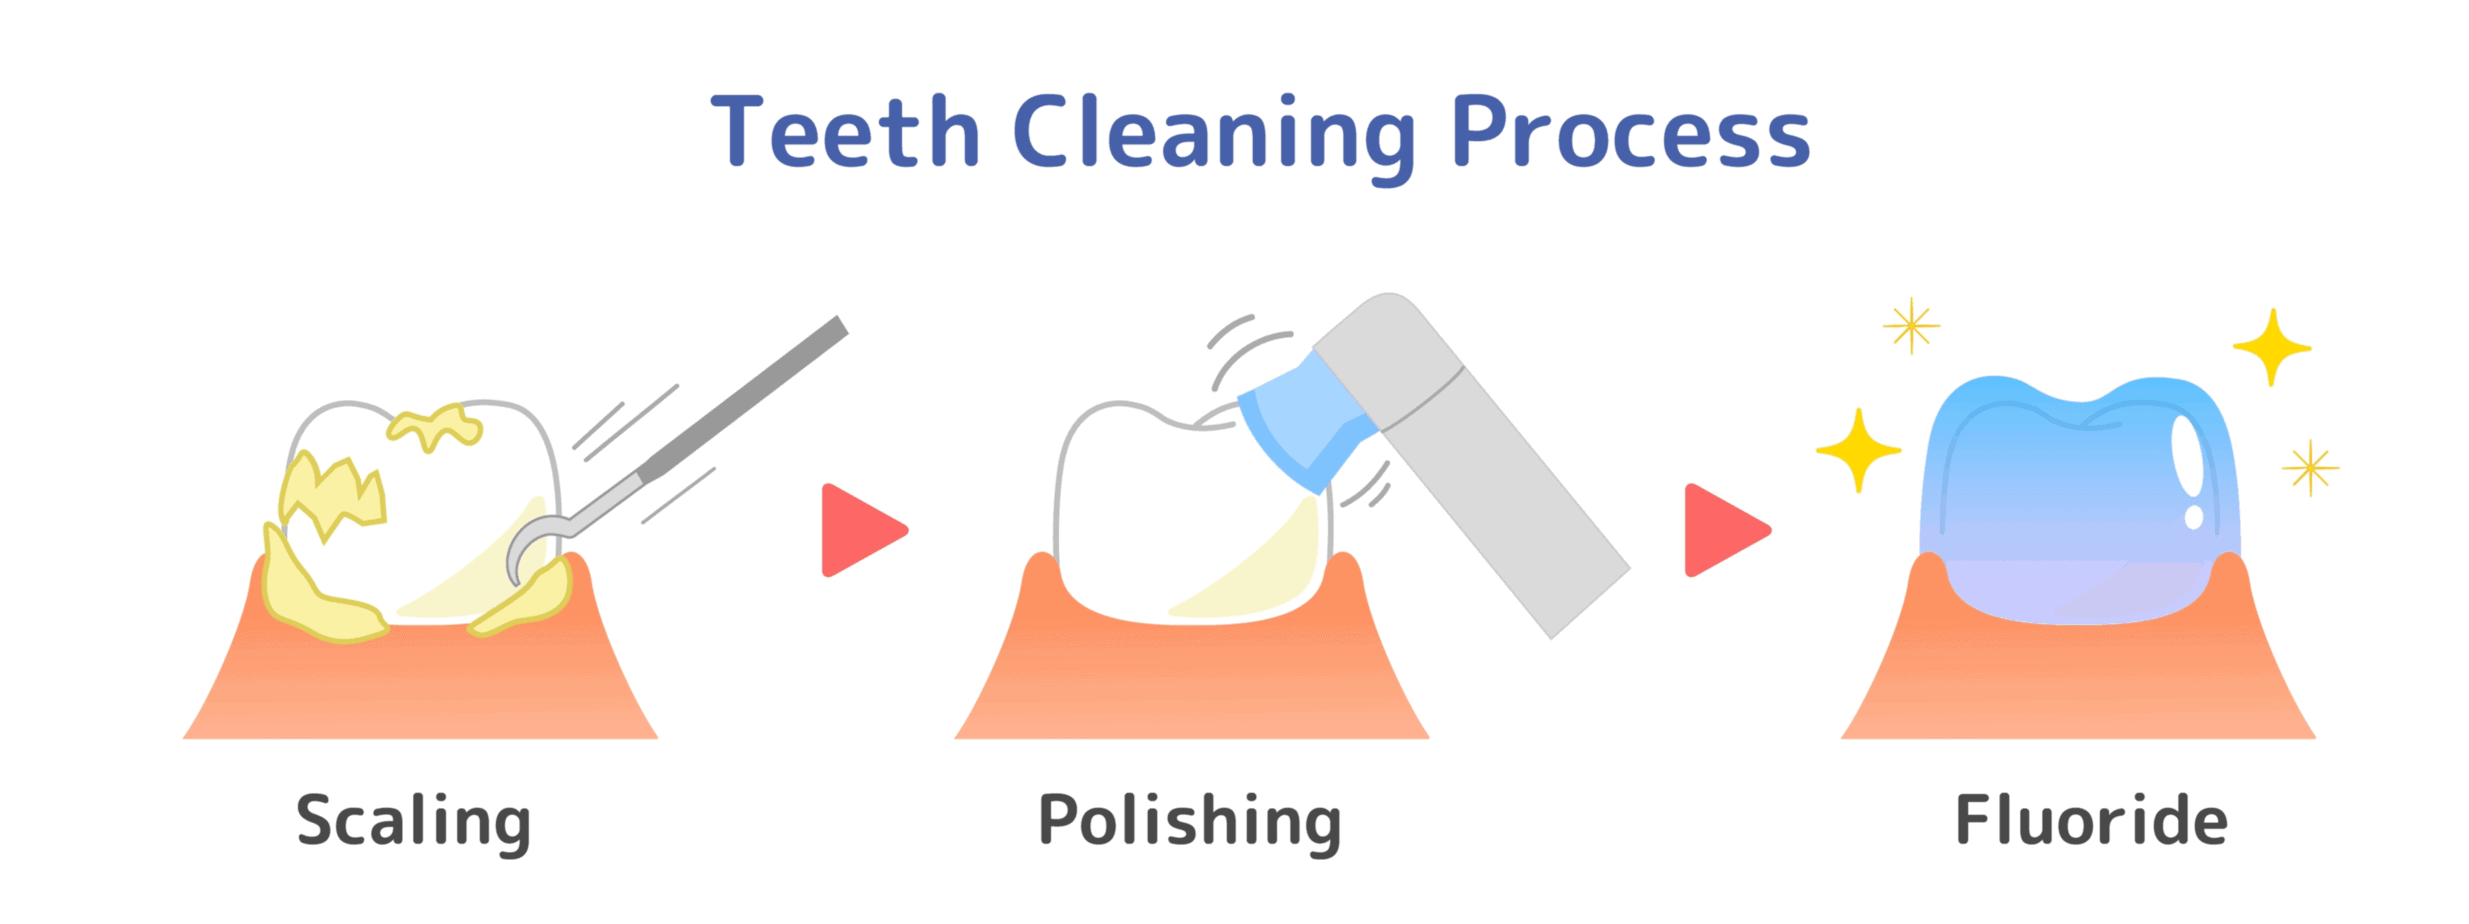 Dental Hygienist Cleaning Teeth | What Do Dental Hygienists Clean Teeth With?